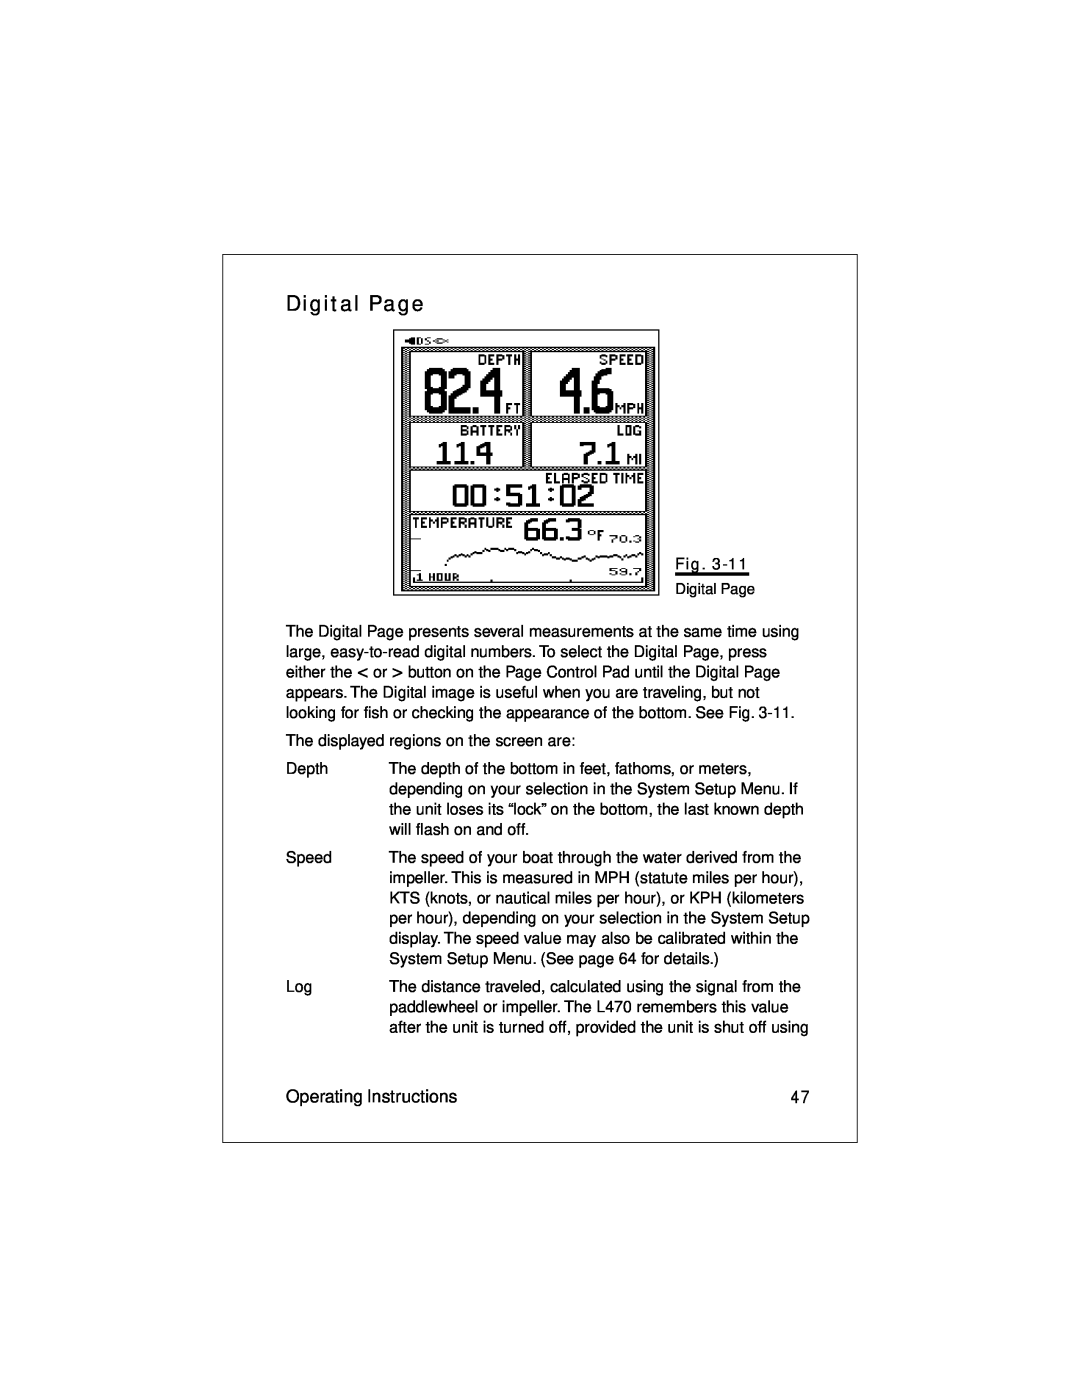 Raymarine L470 instruction manual Digital Page, Operating Instructions 